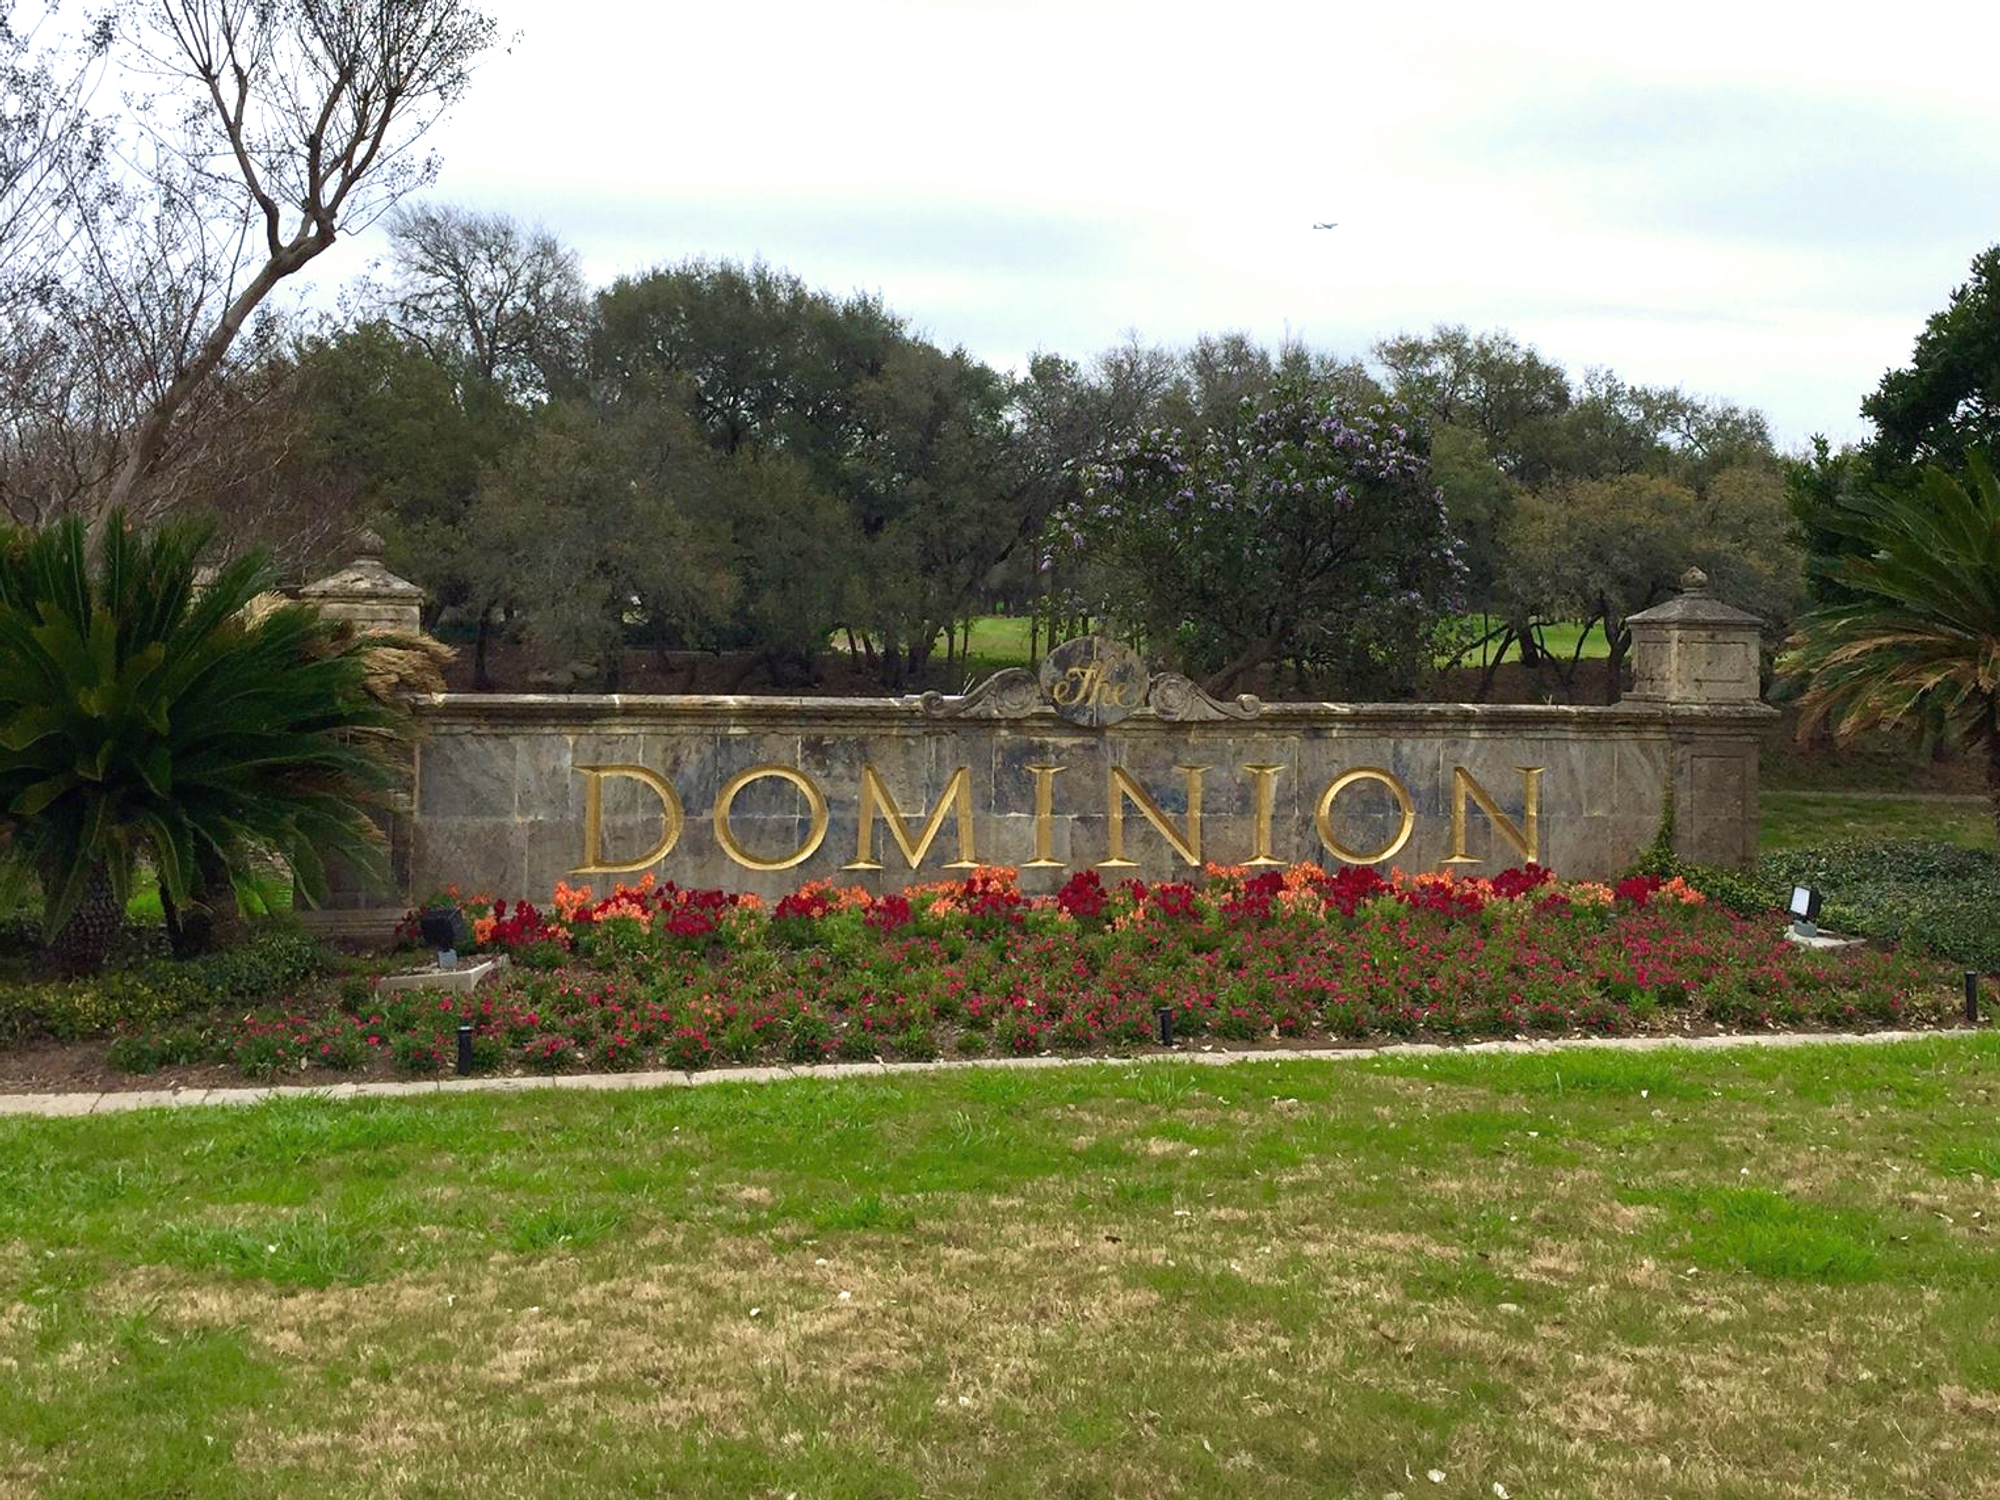 Dominion San Antonio sign